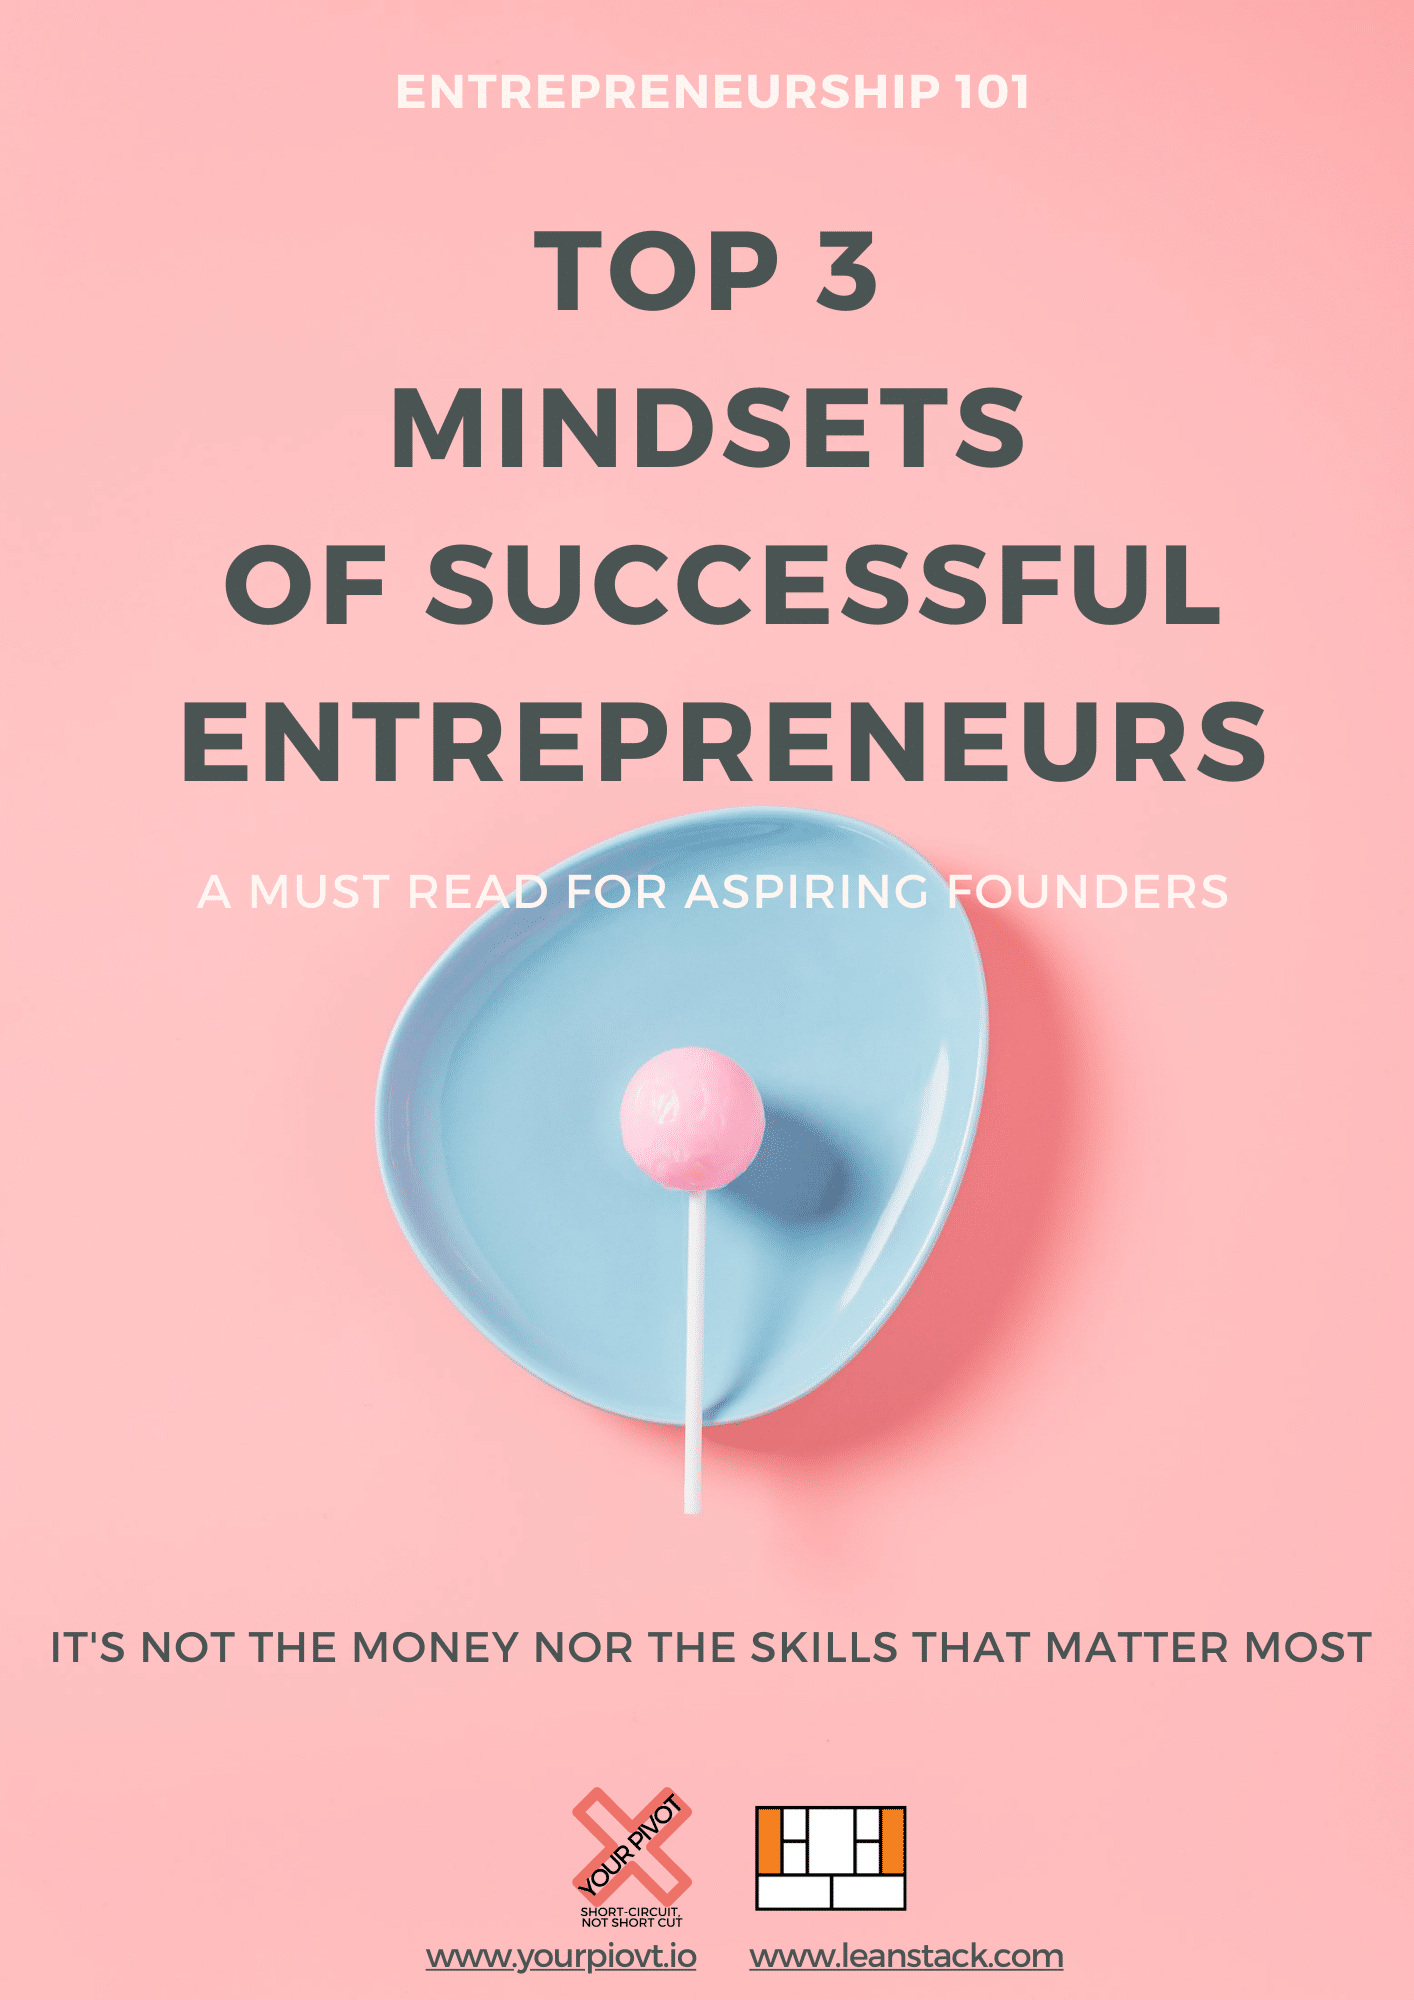 Top 3 Mindsets of Successful Entrepreneurs